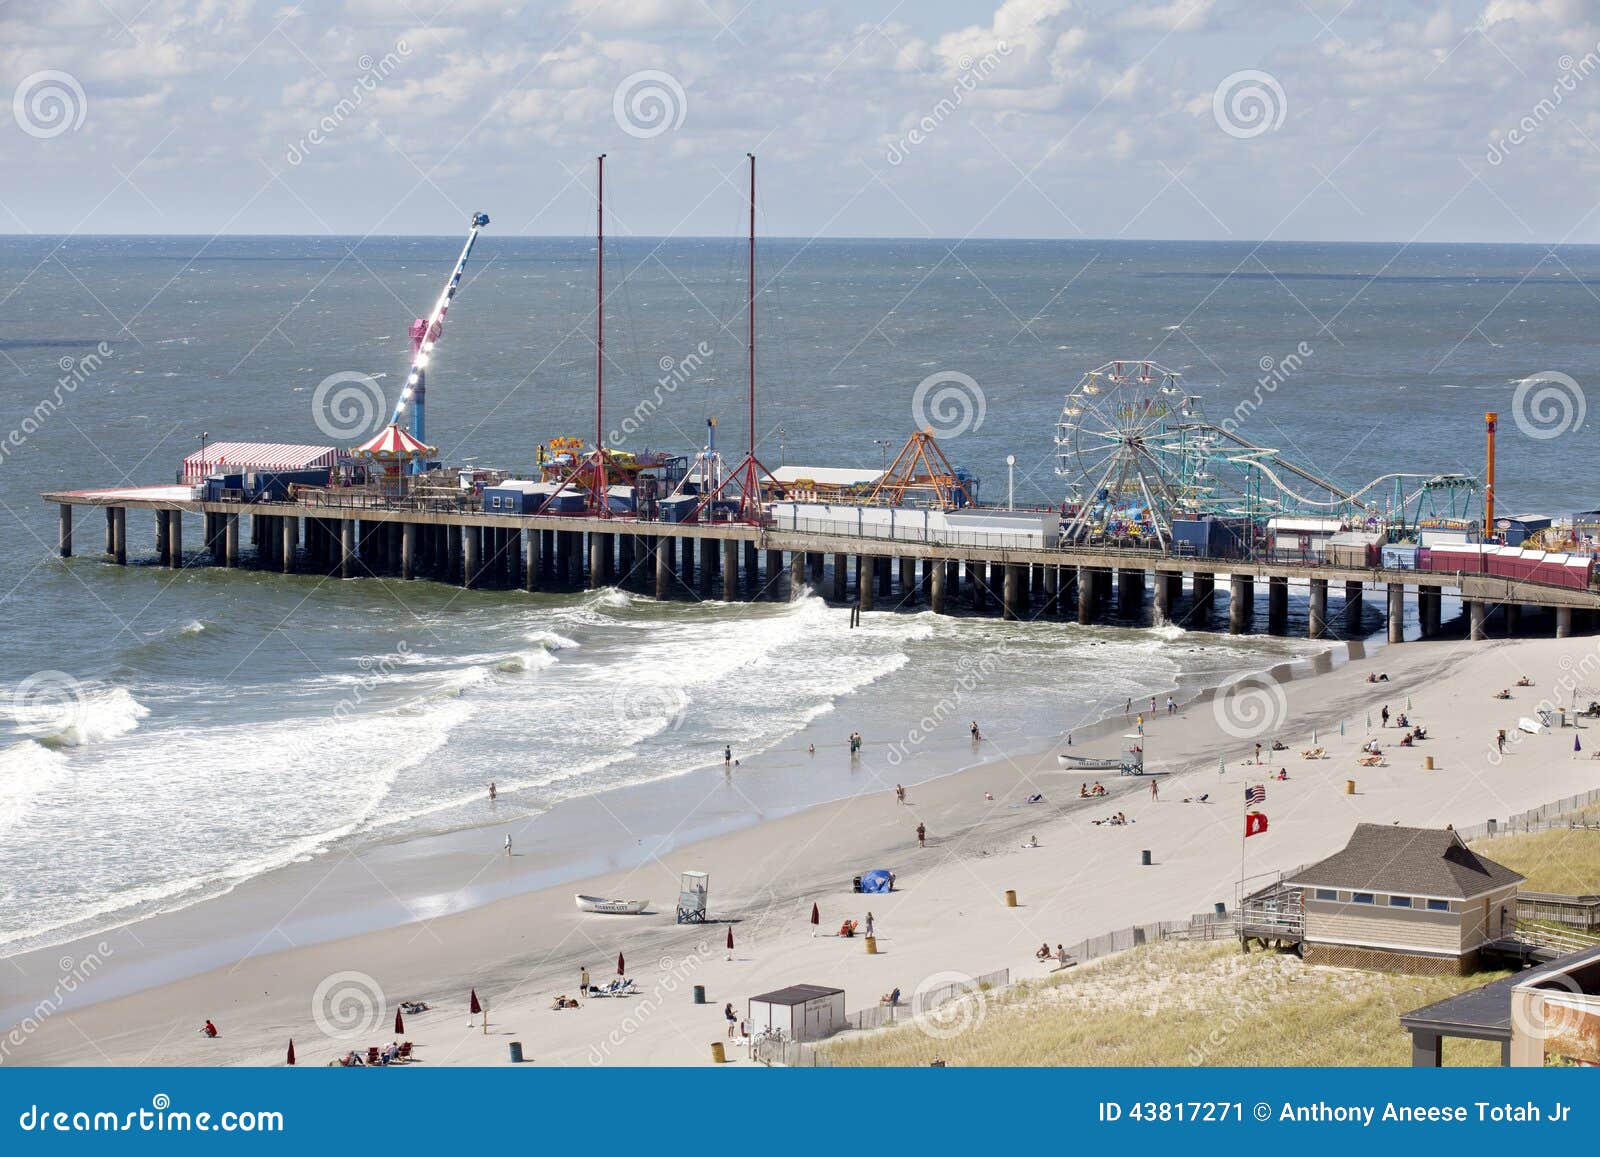 https://thumbs.dreamstime.com/z/famous-steel-pier-atlantic-city-new-jersey-aerial-view-people-enjoying-beach-early-morning-43817271.jpg